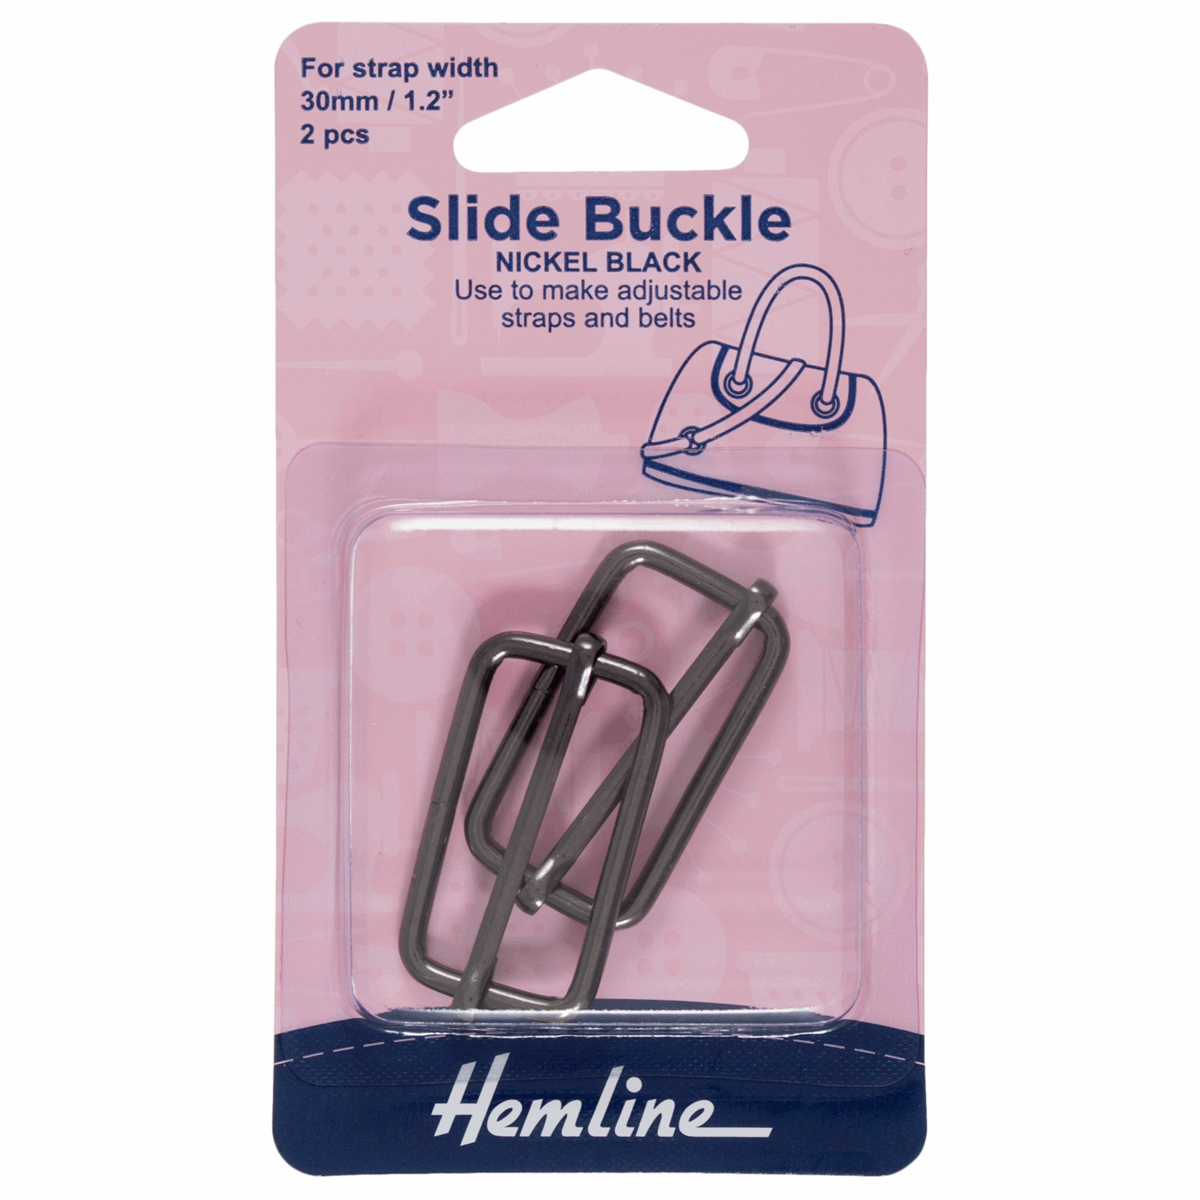 30mm Slide Buckle - Hemline